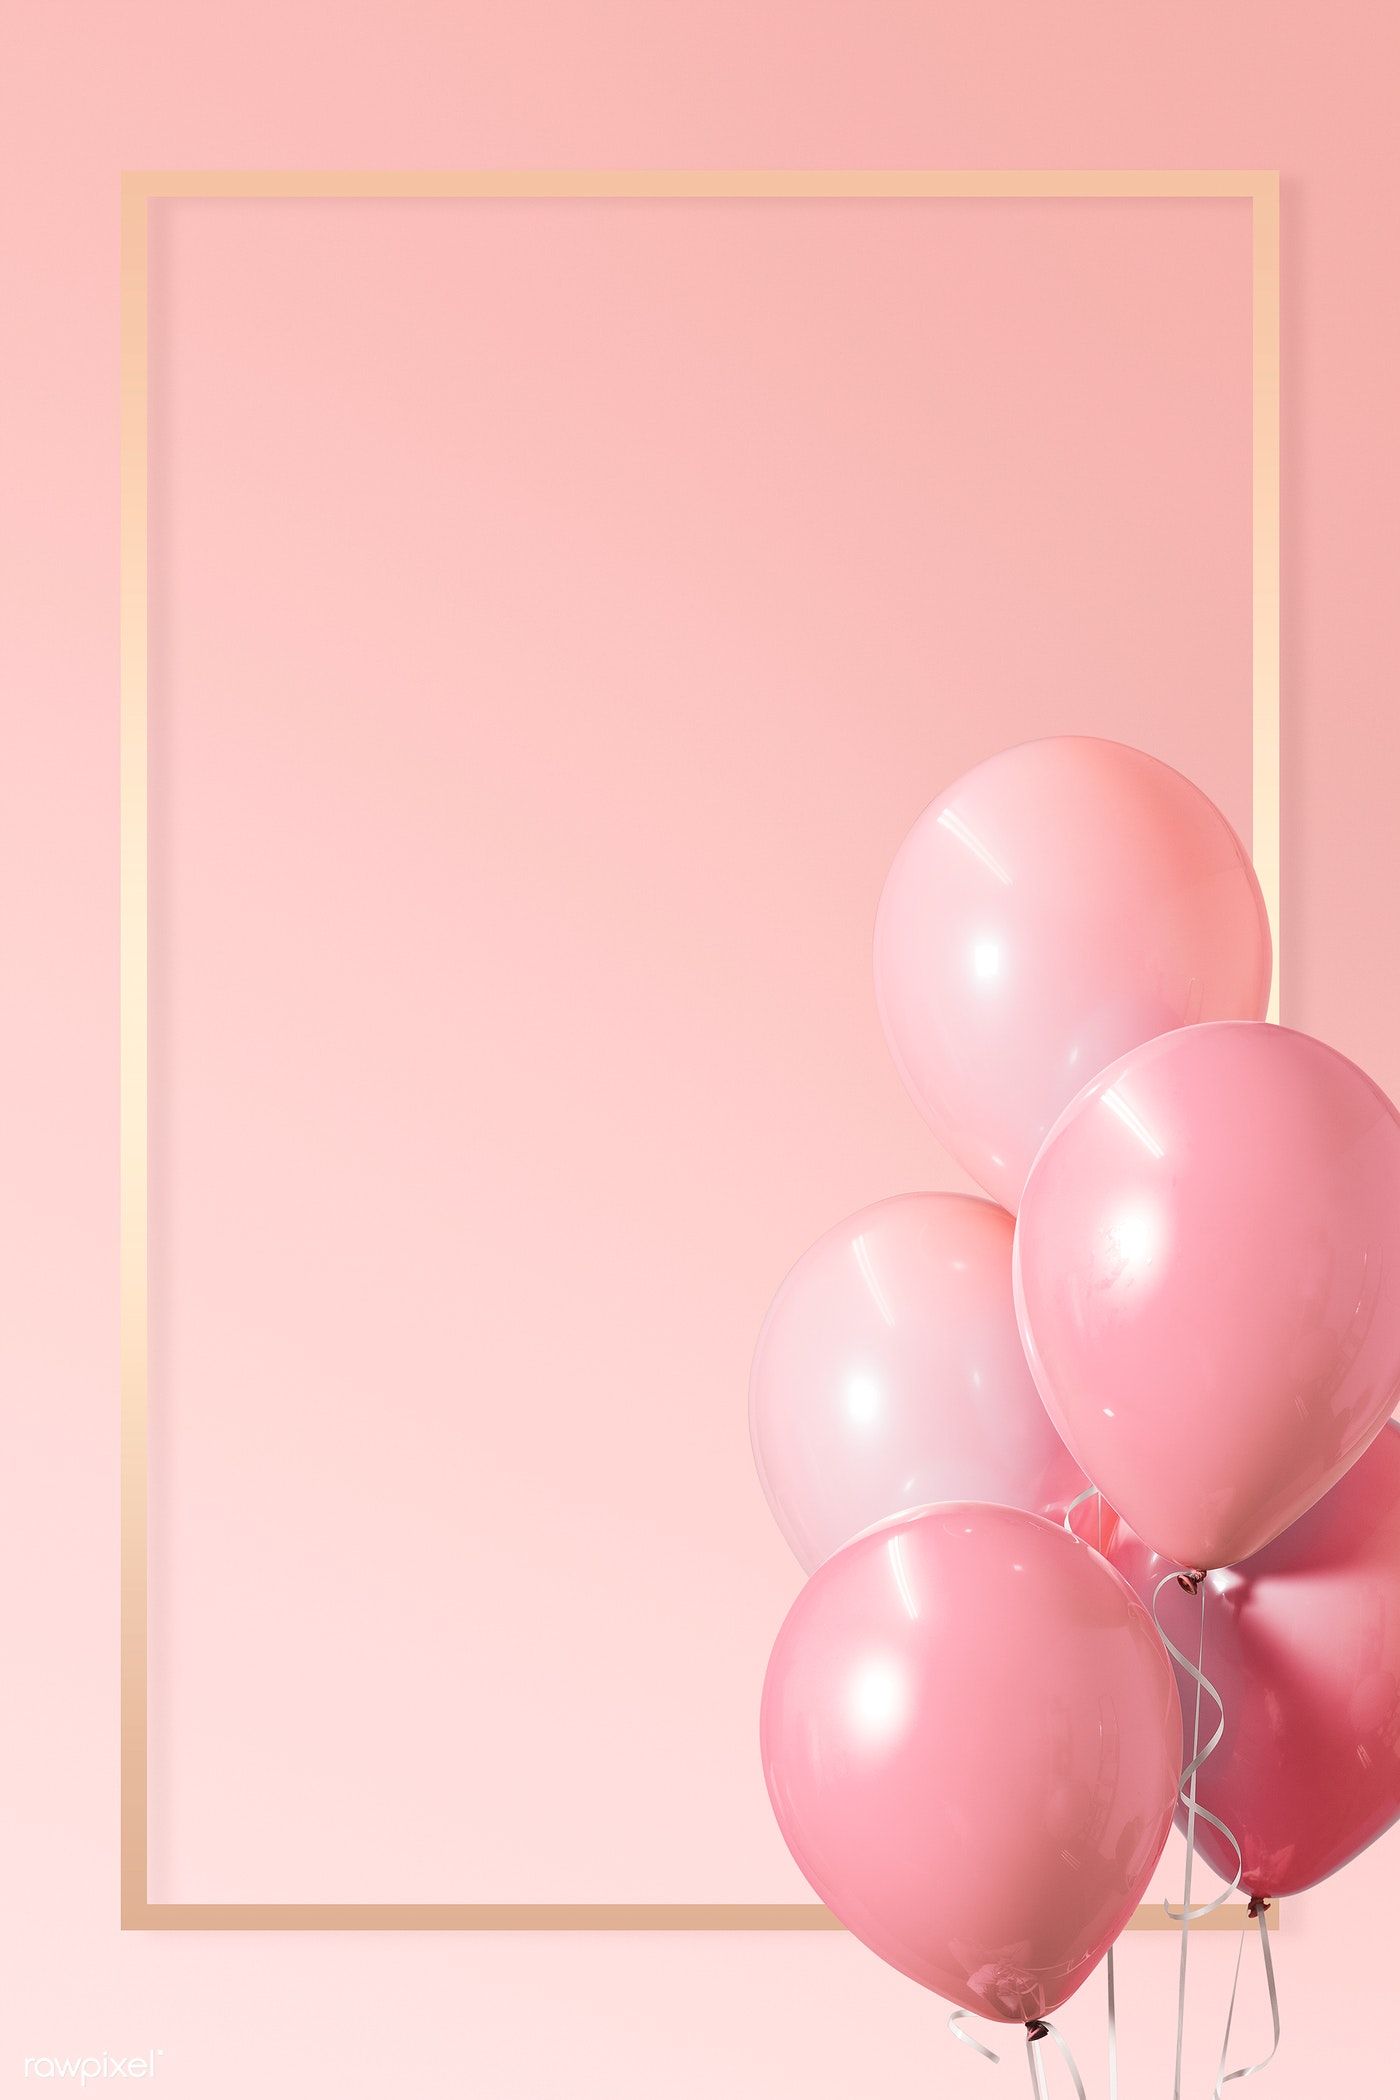 Download premium illustration of Golden frame balloons on a pink